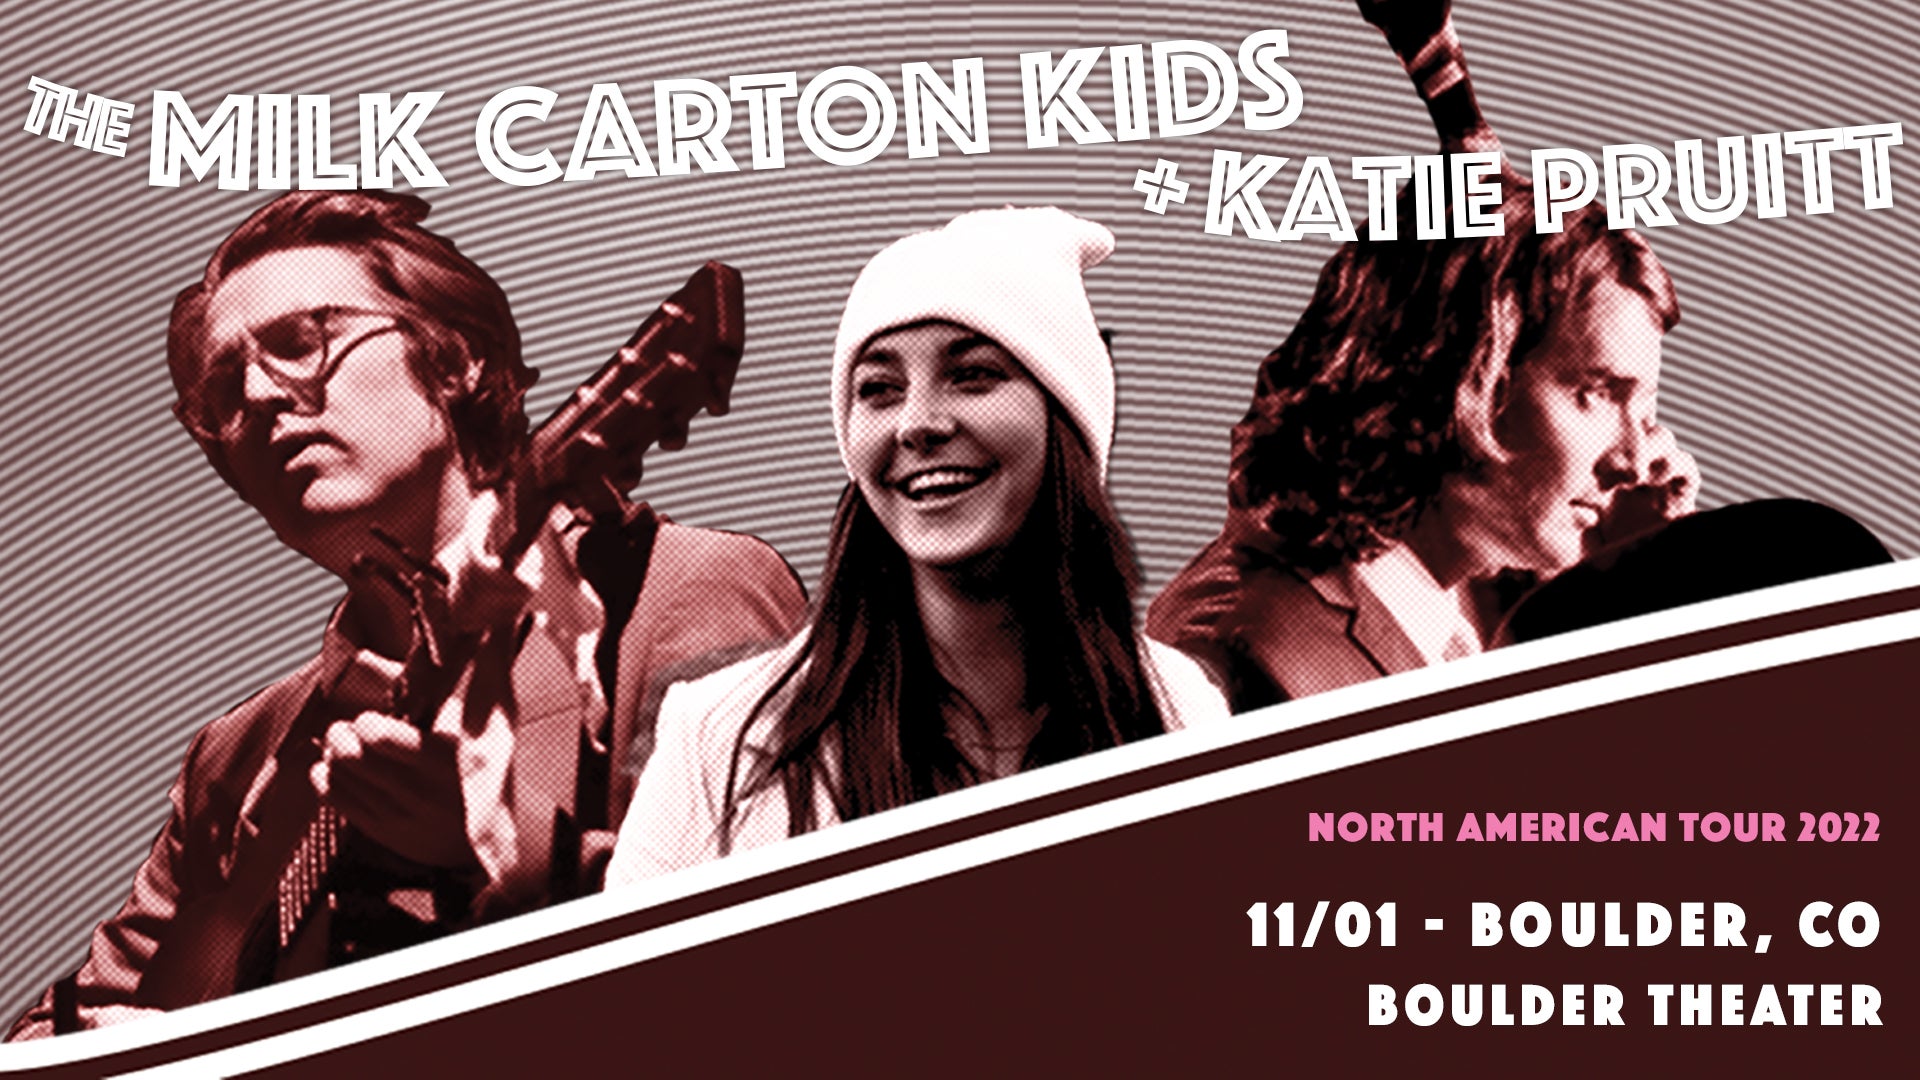 The Milk Carton Kids + Katie Pruitt will play Boulder Theater on November 1st, 2022